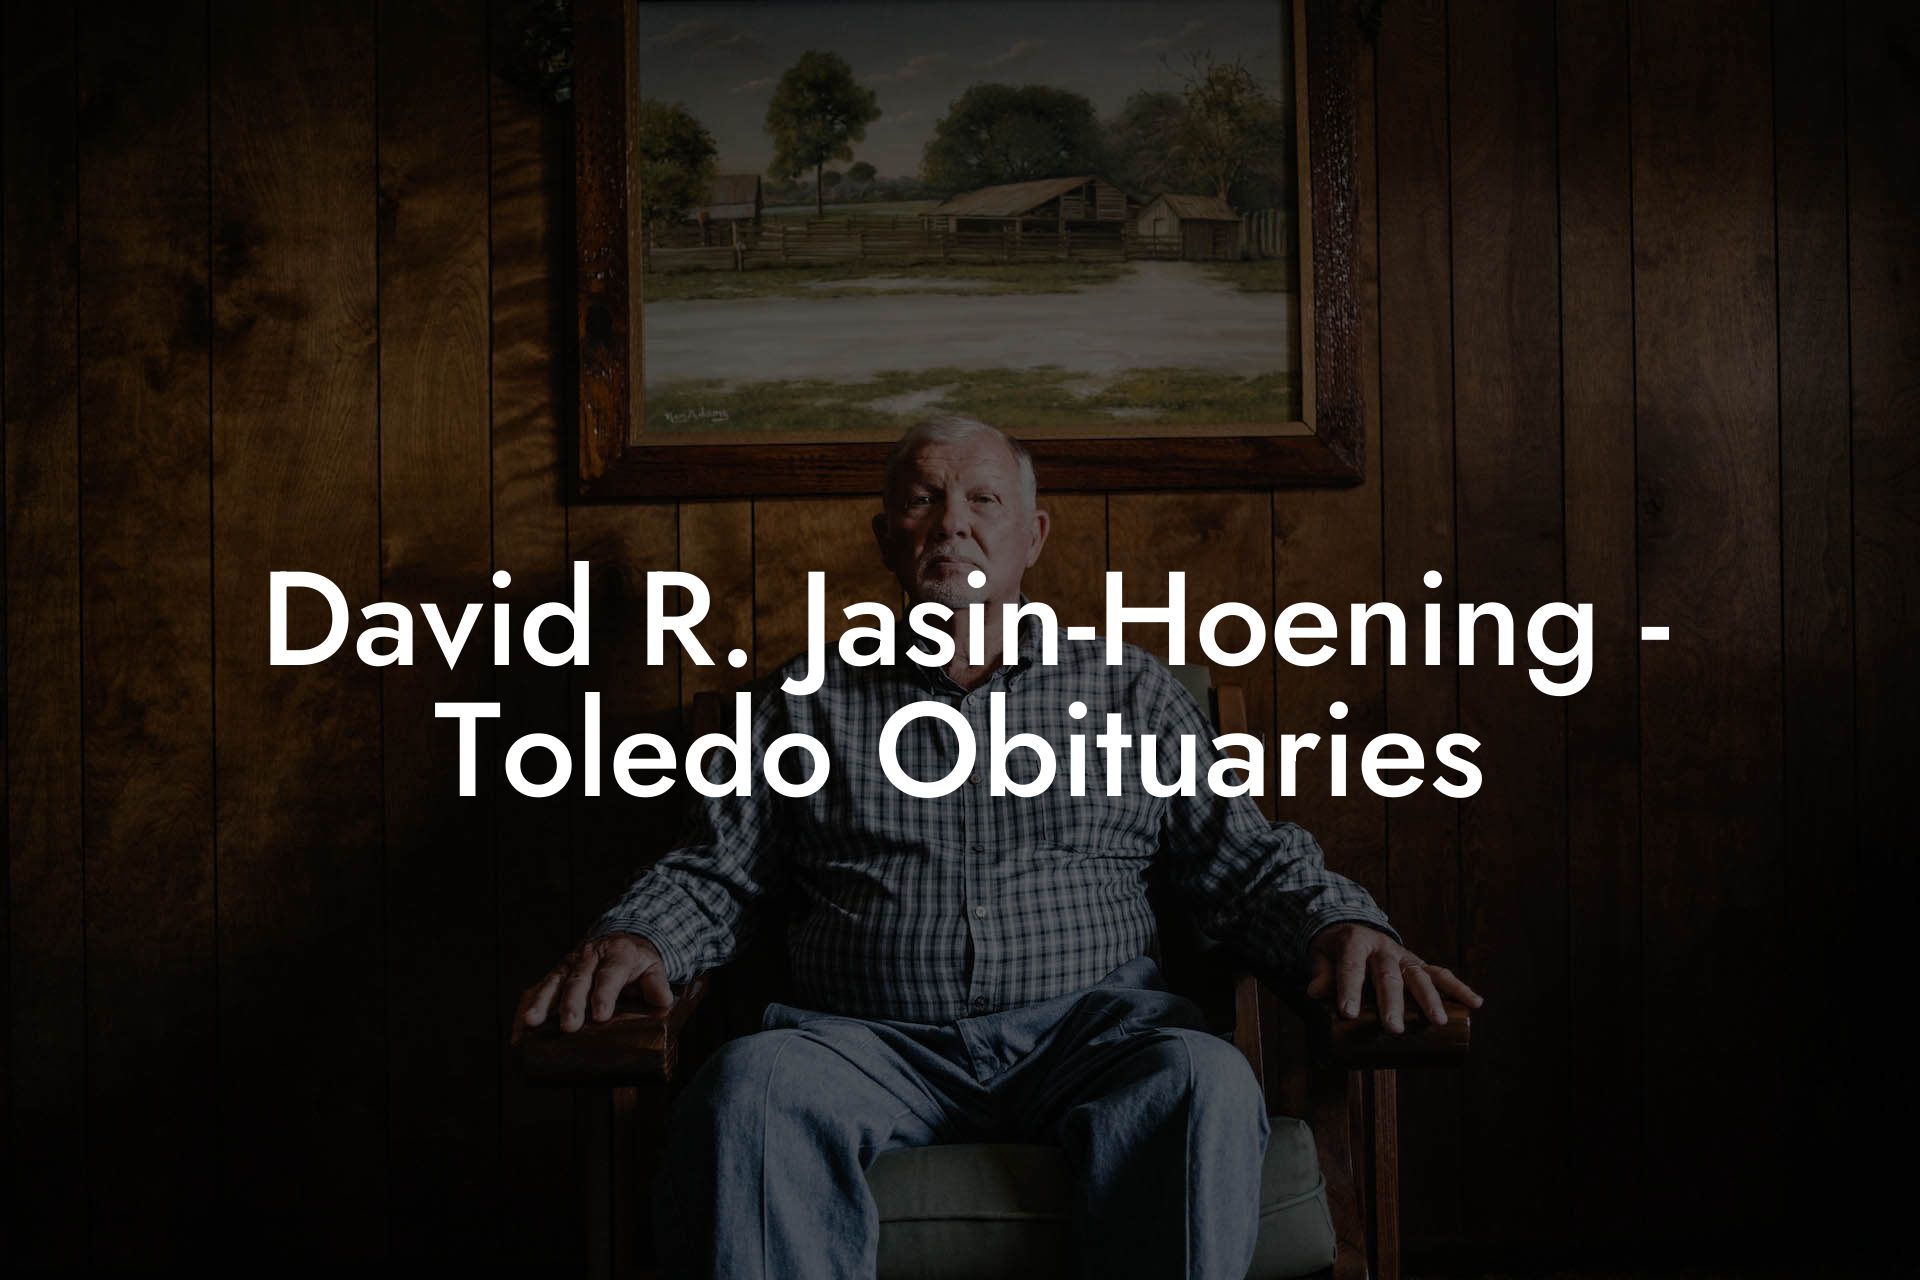 David R. Jasin-Hoening - Toledo Obituaries